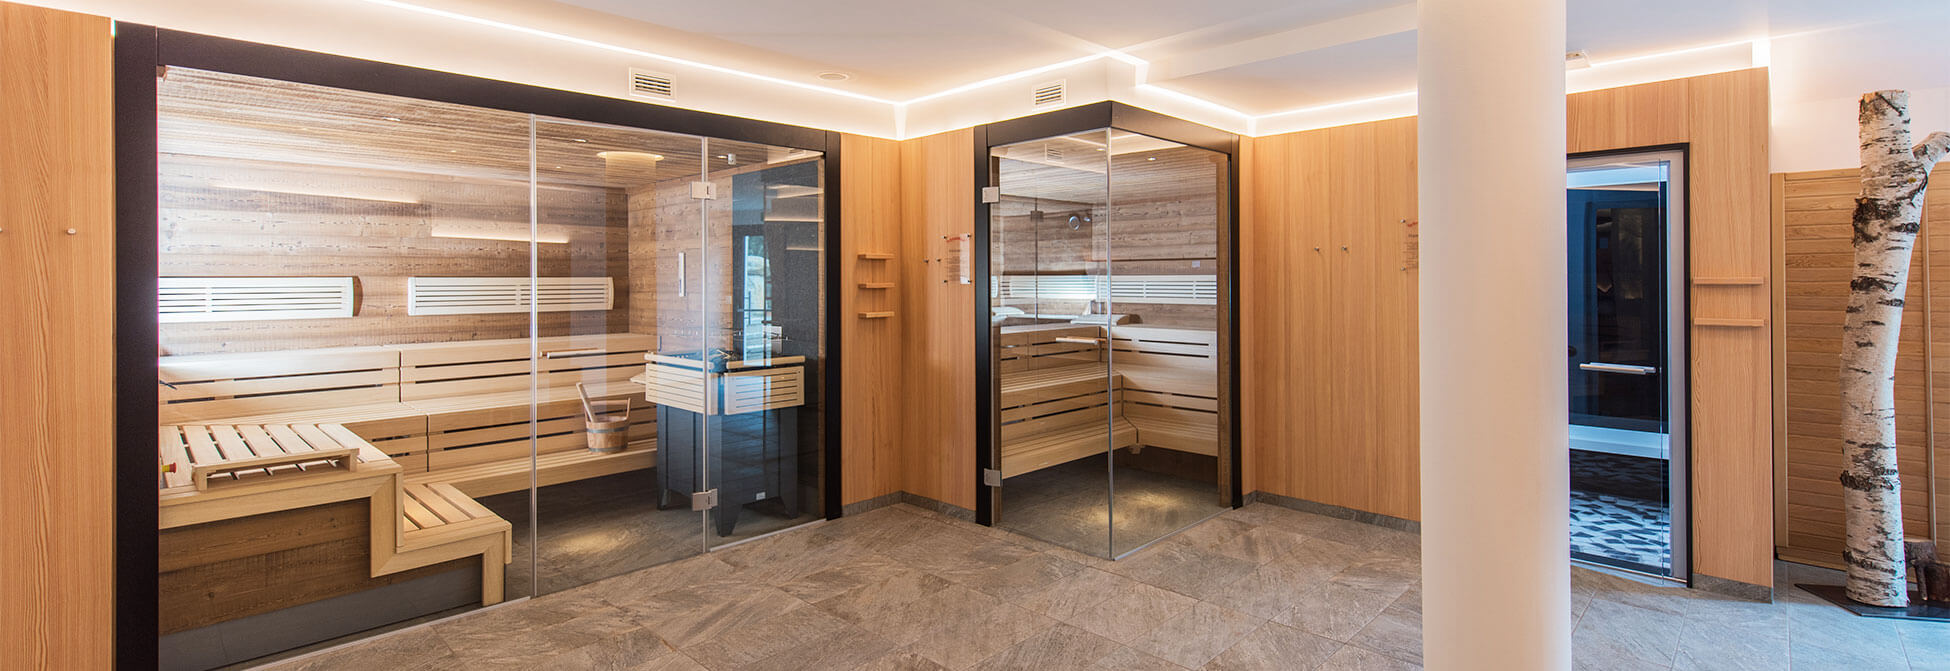 New spa hotel, sauna & relax area in Val Pusteria | Schmalzlhof